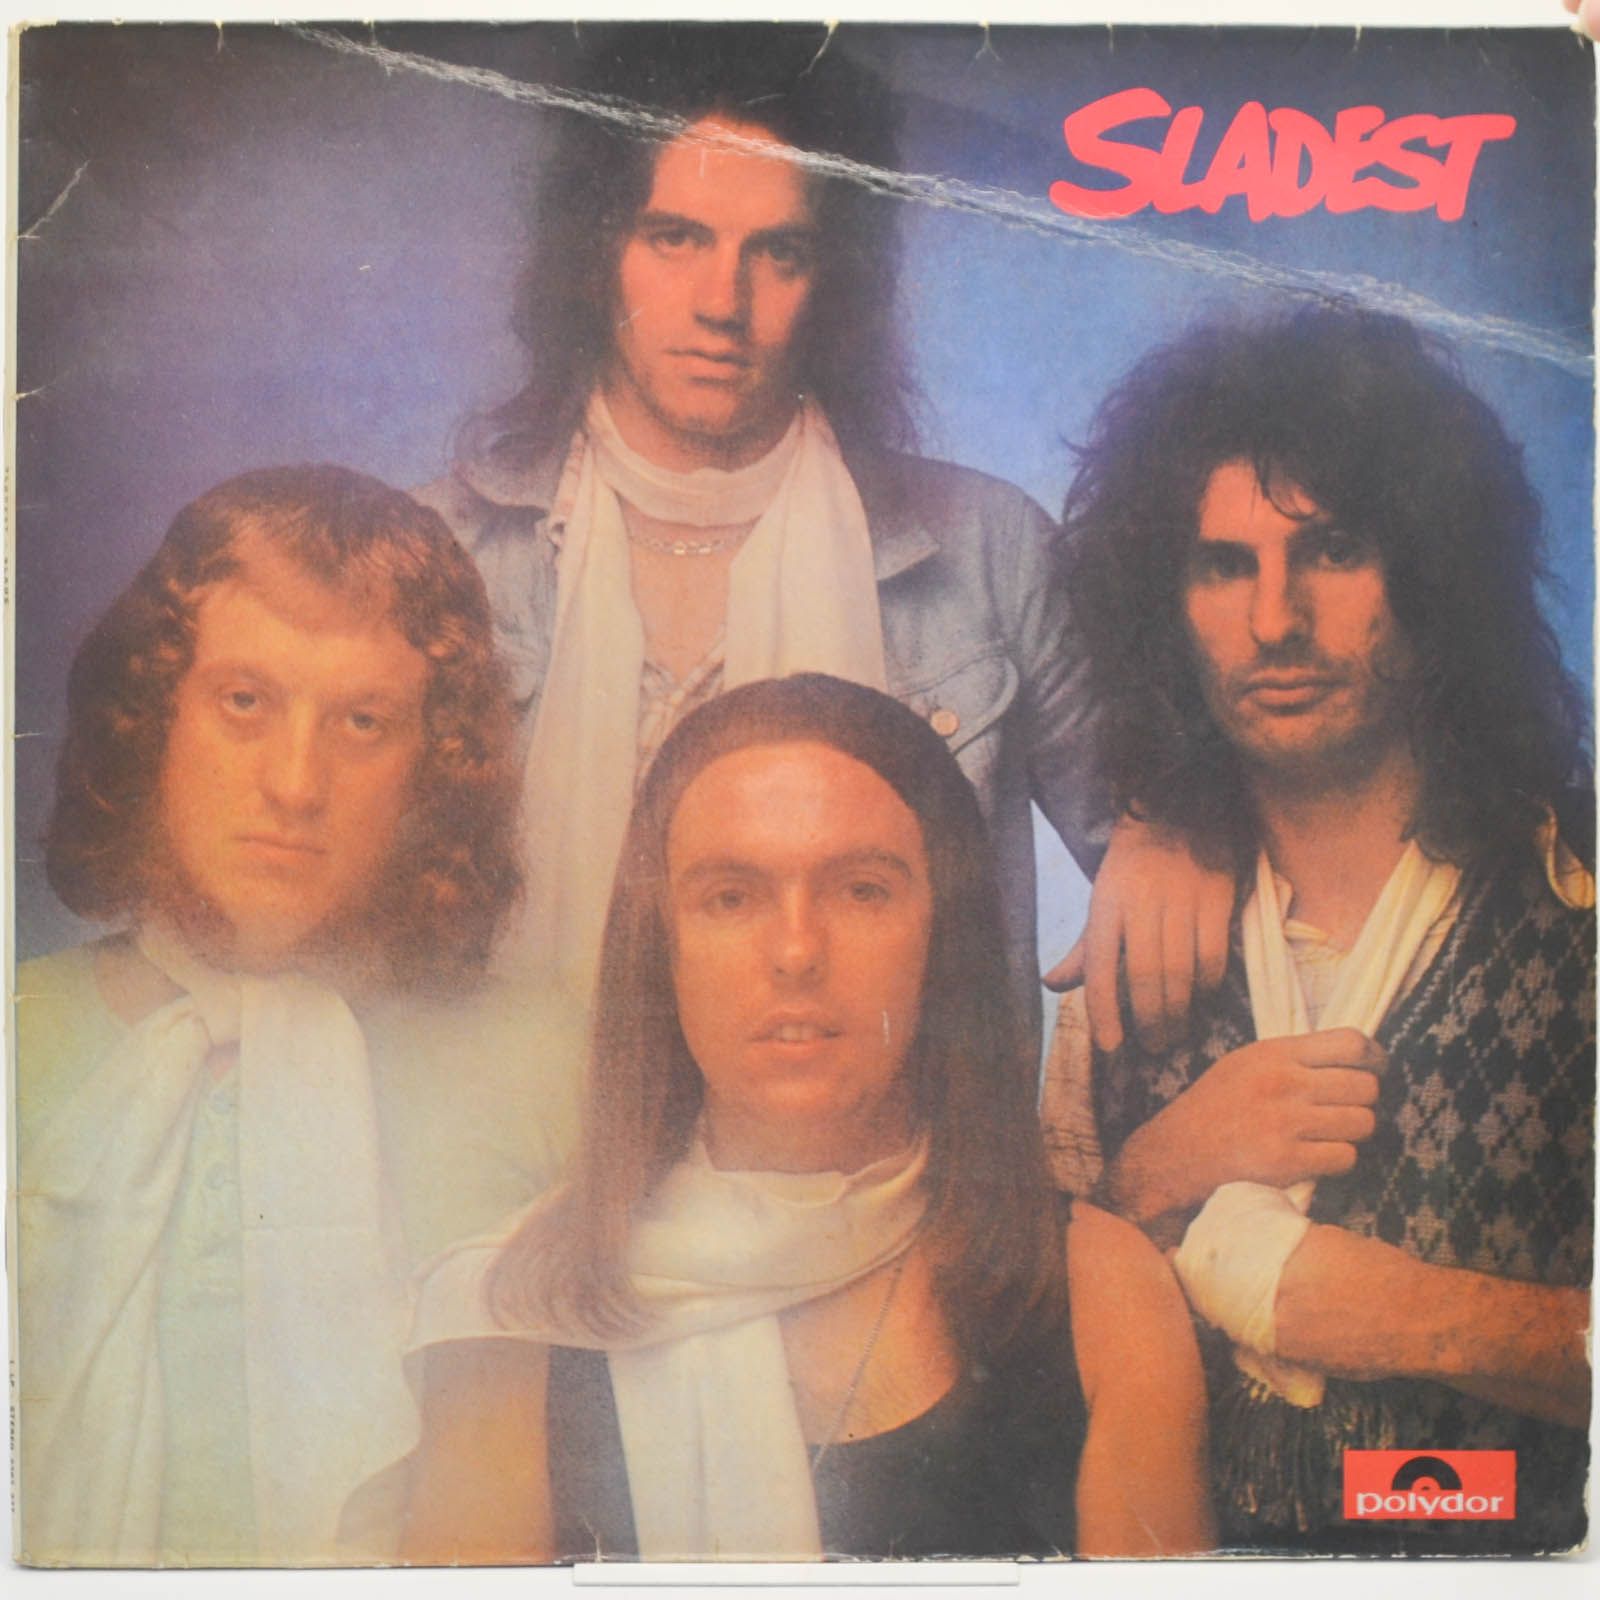 Slade — Sladest, 1973